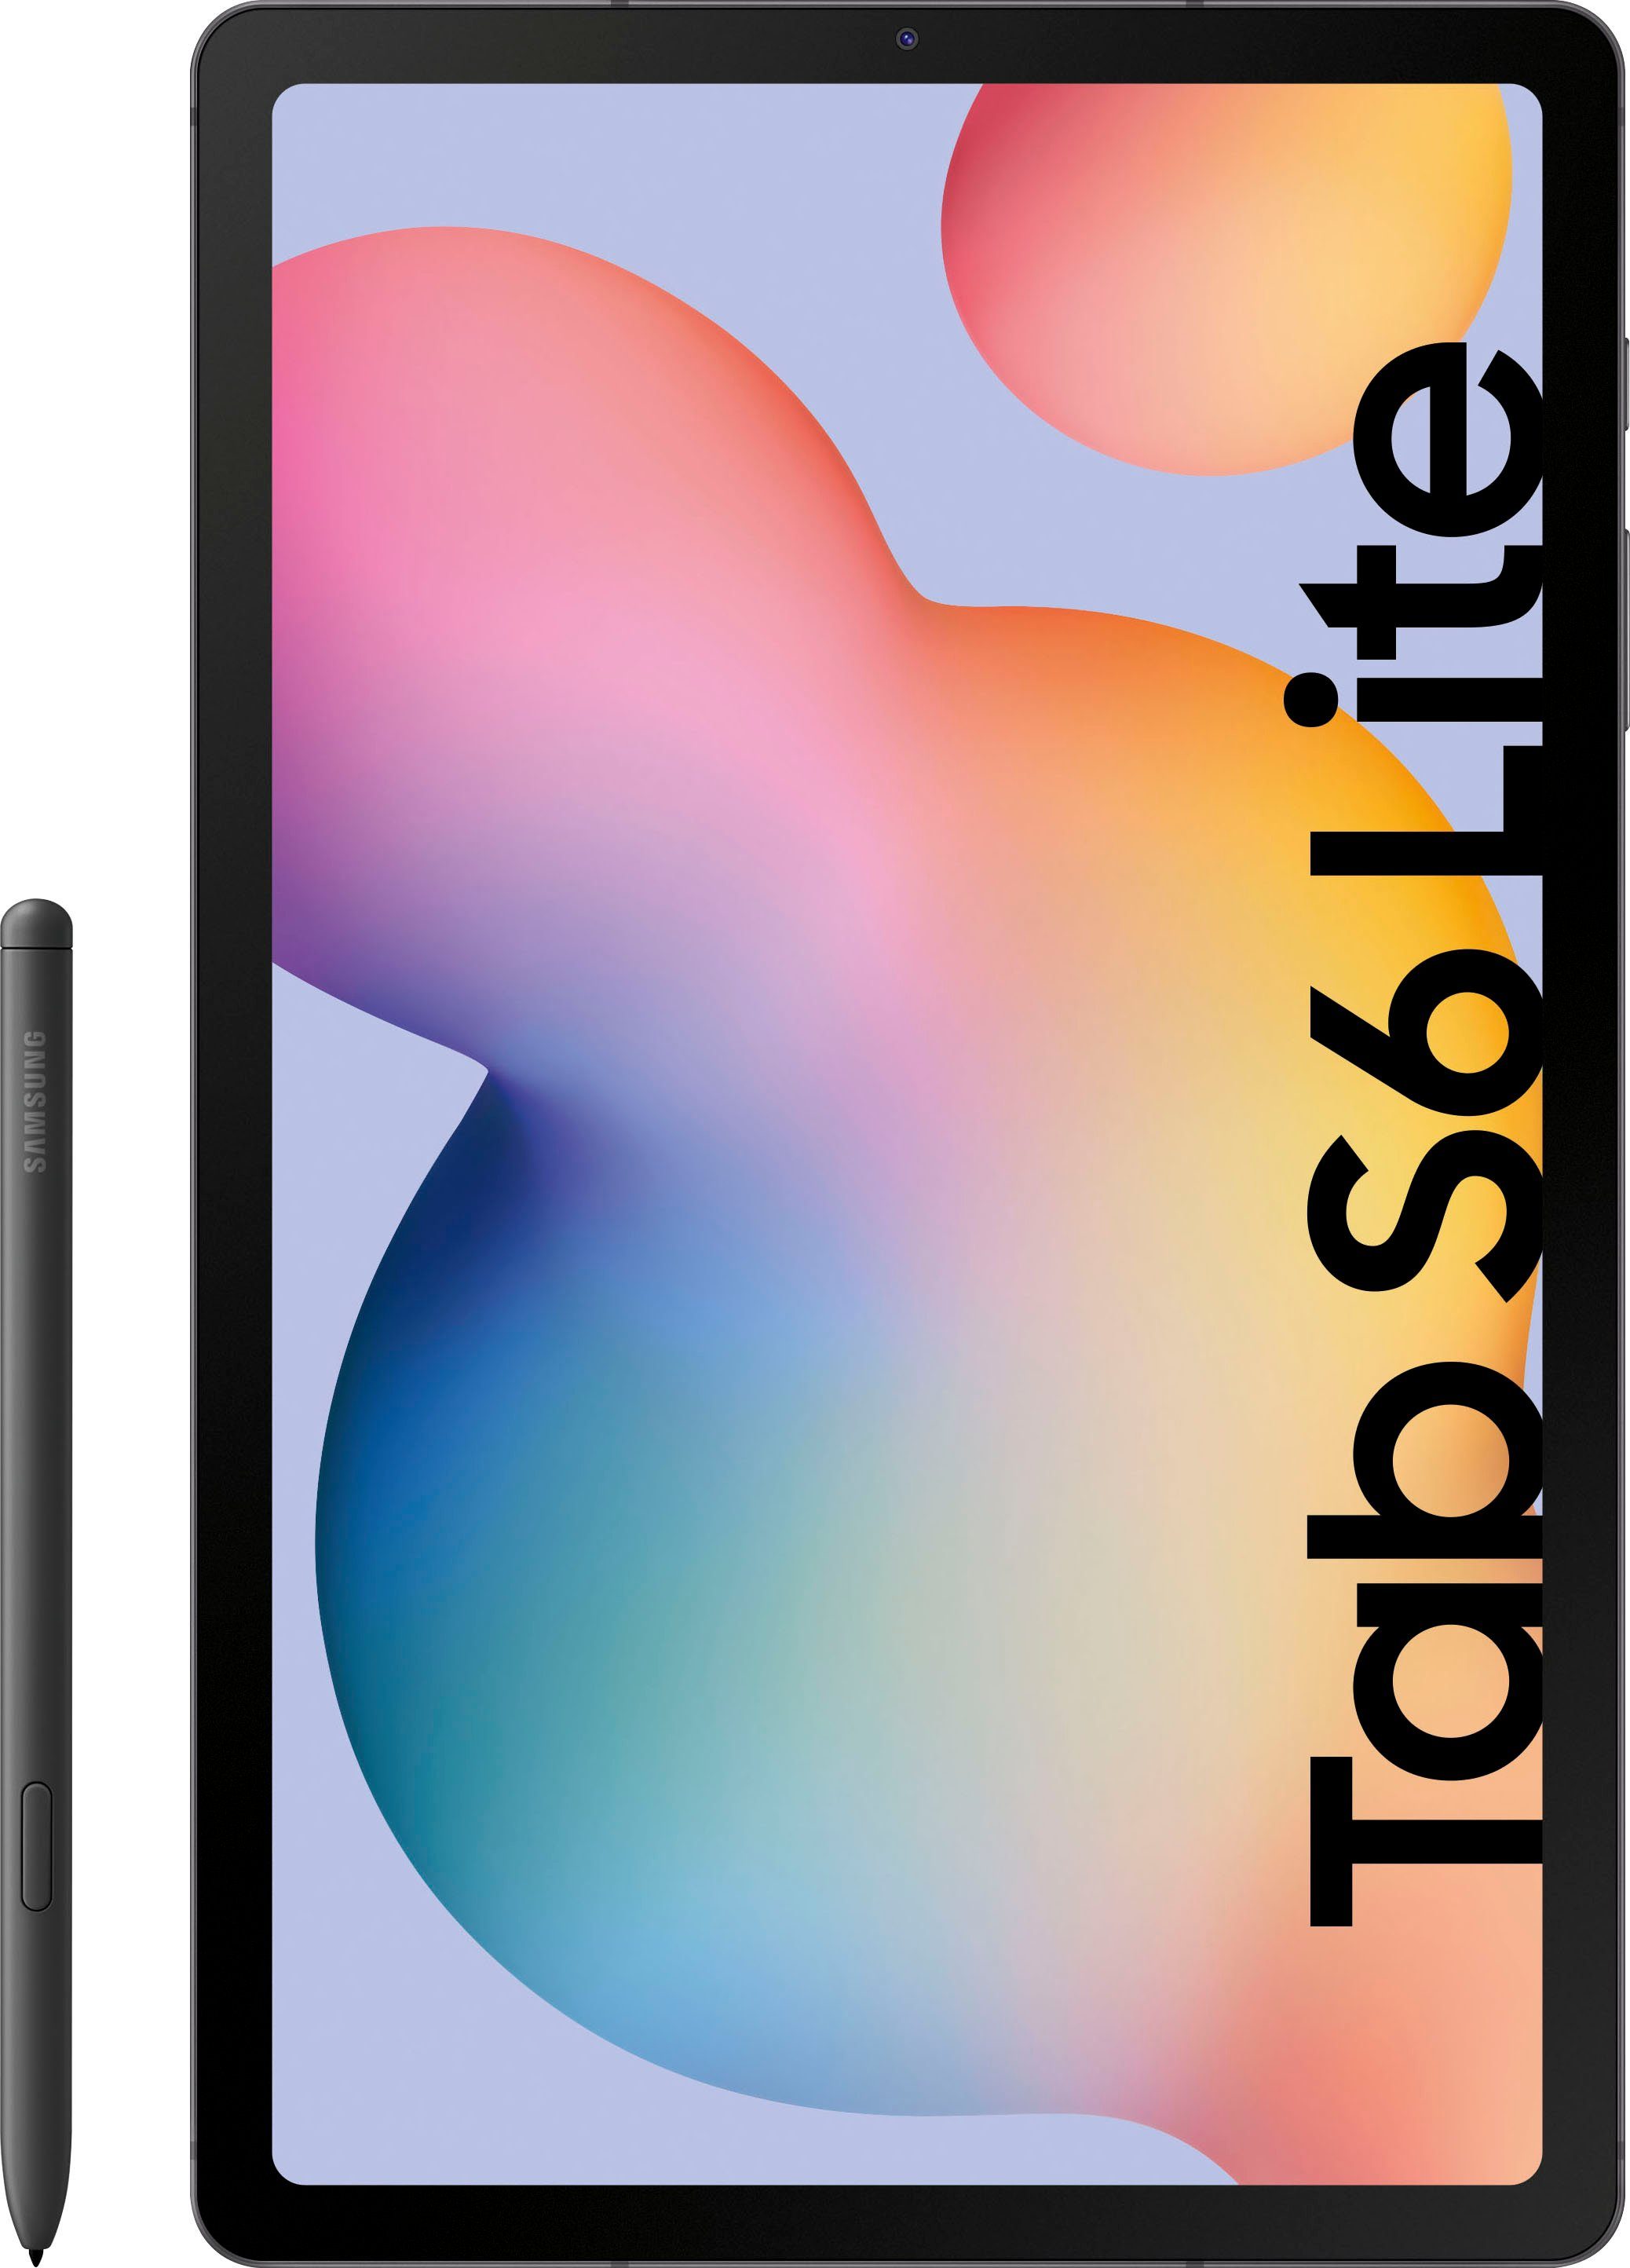 Ik wil niet Mentaliteit lobby Samsung Tablet Galaxy Tab S6 Lite Wifi in de online shop | OTTO